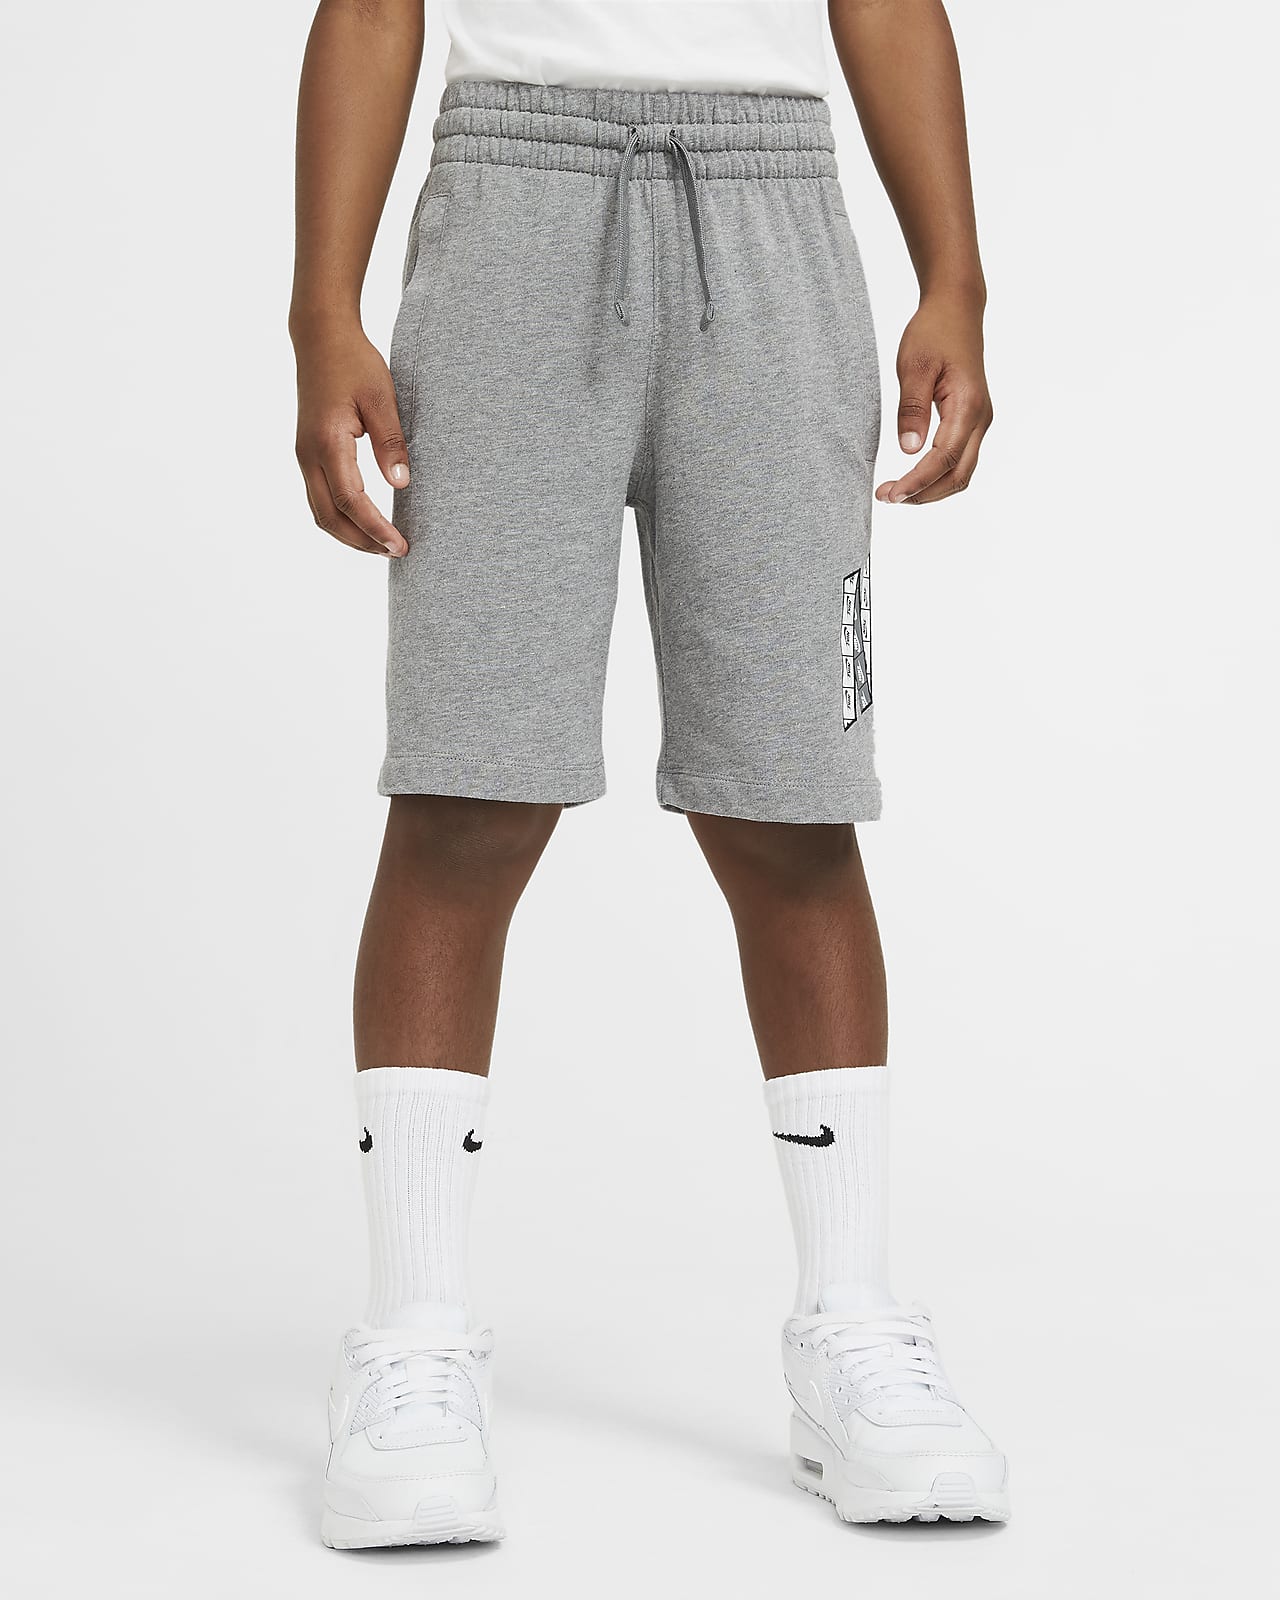 grey nike jersey shorts